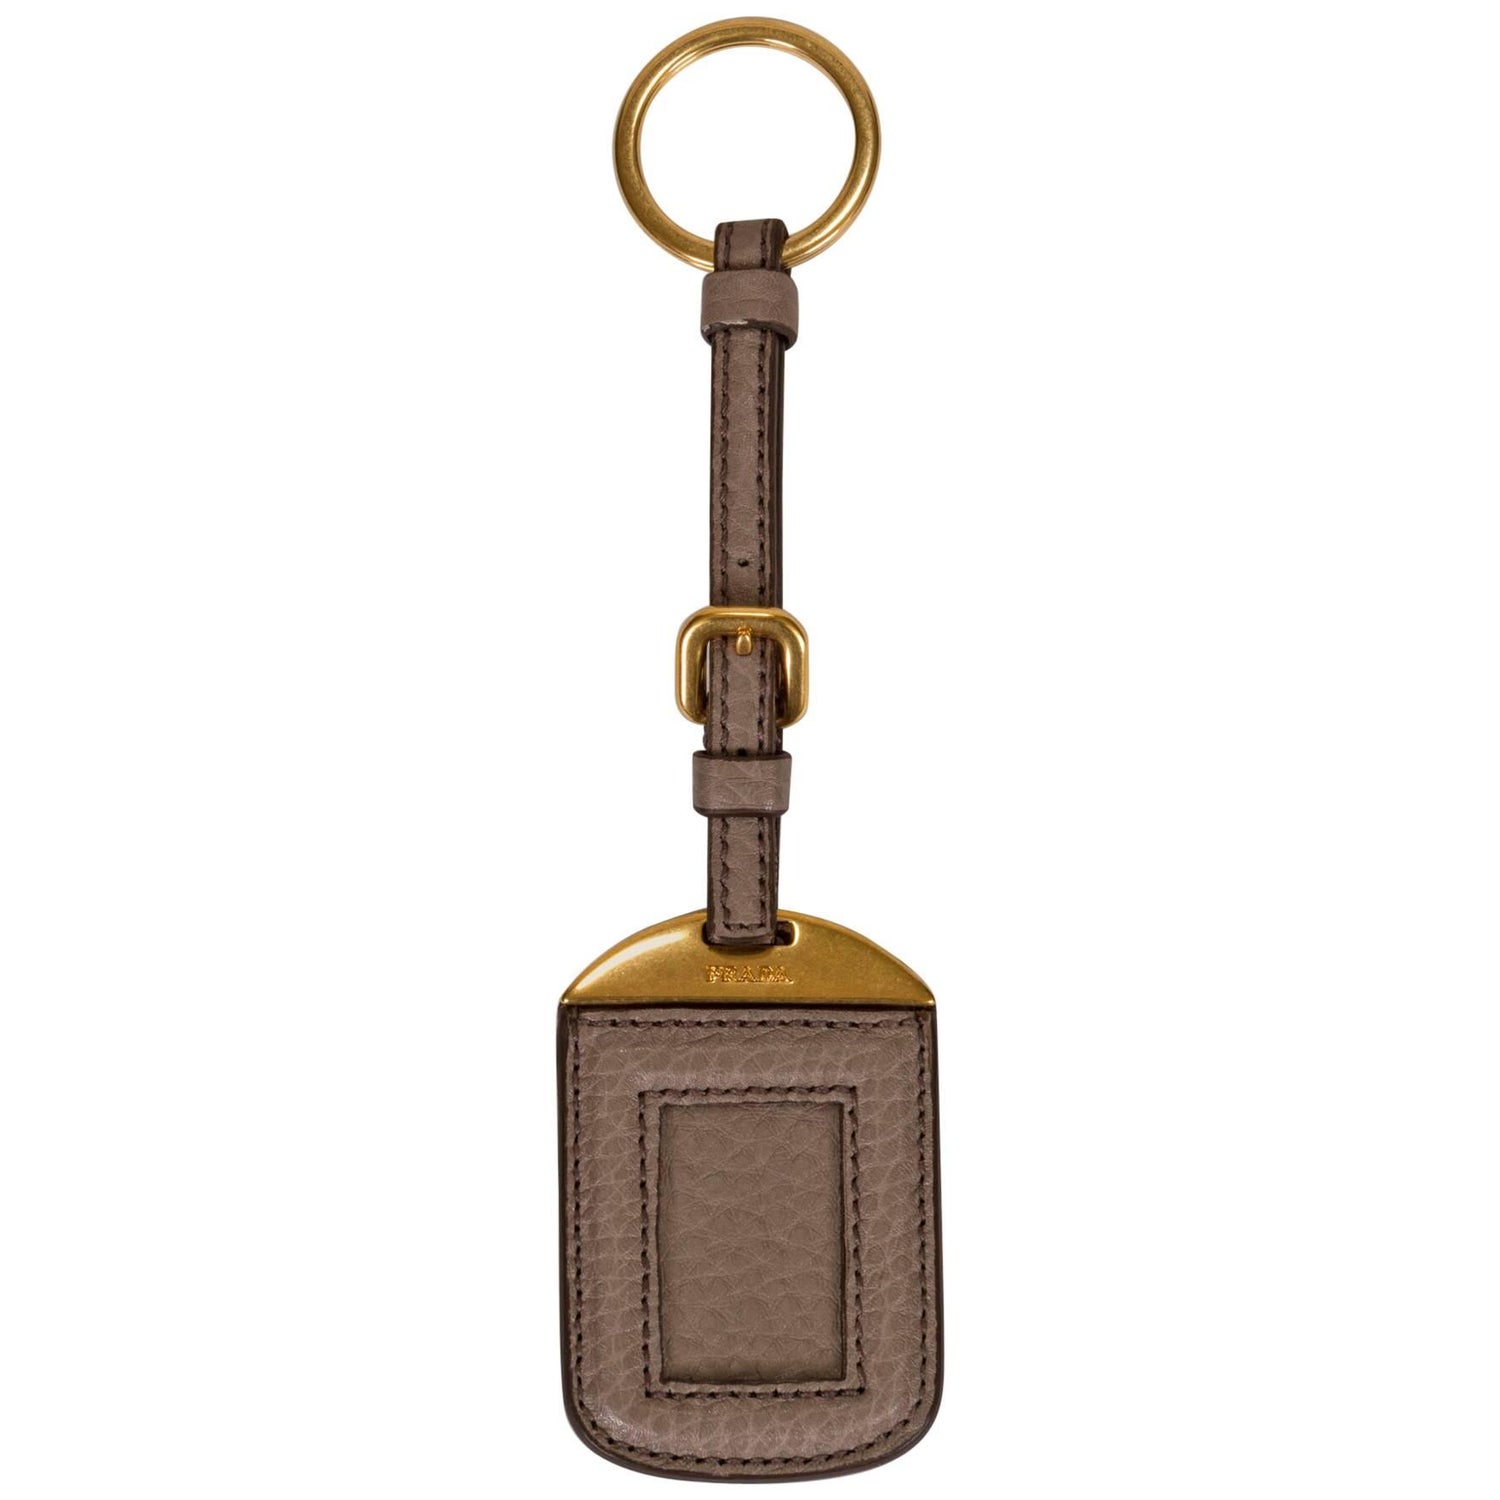 Sold at Auction: Louis Vuitton, Louis Vuitton Spaceman Keychain